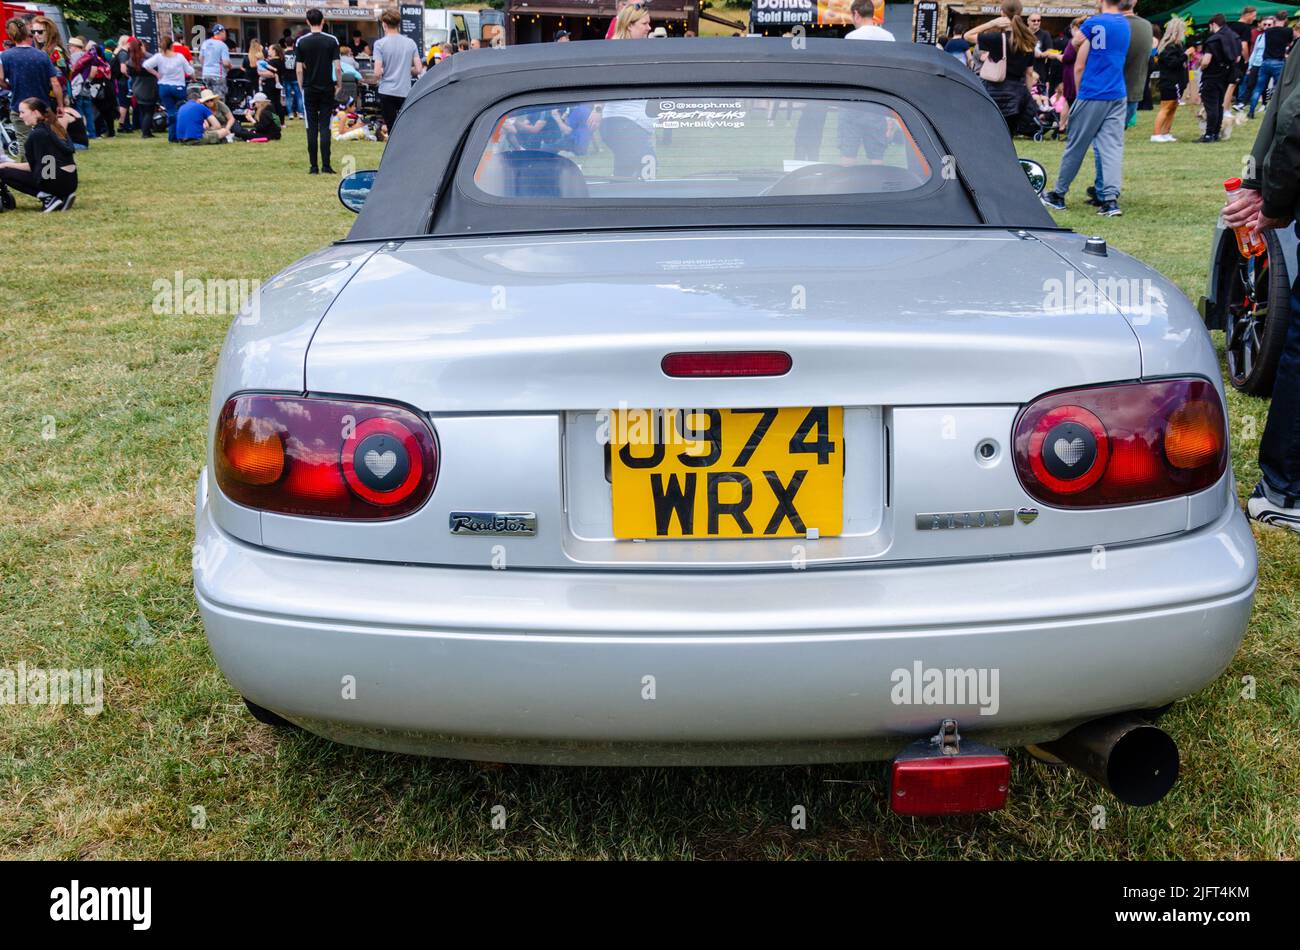 of a silver 1991 Mazda MX5 at the Berkshire Motor Show at Reading, UK Stock Photo